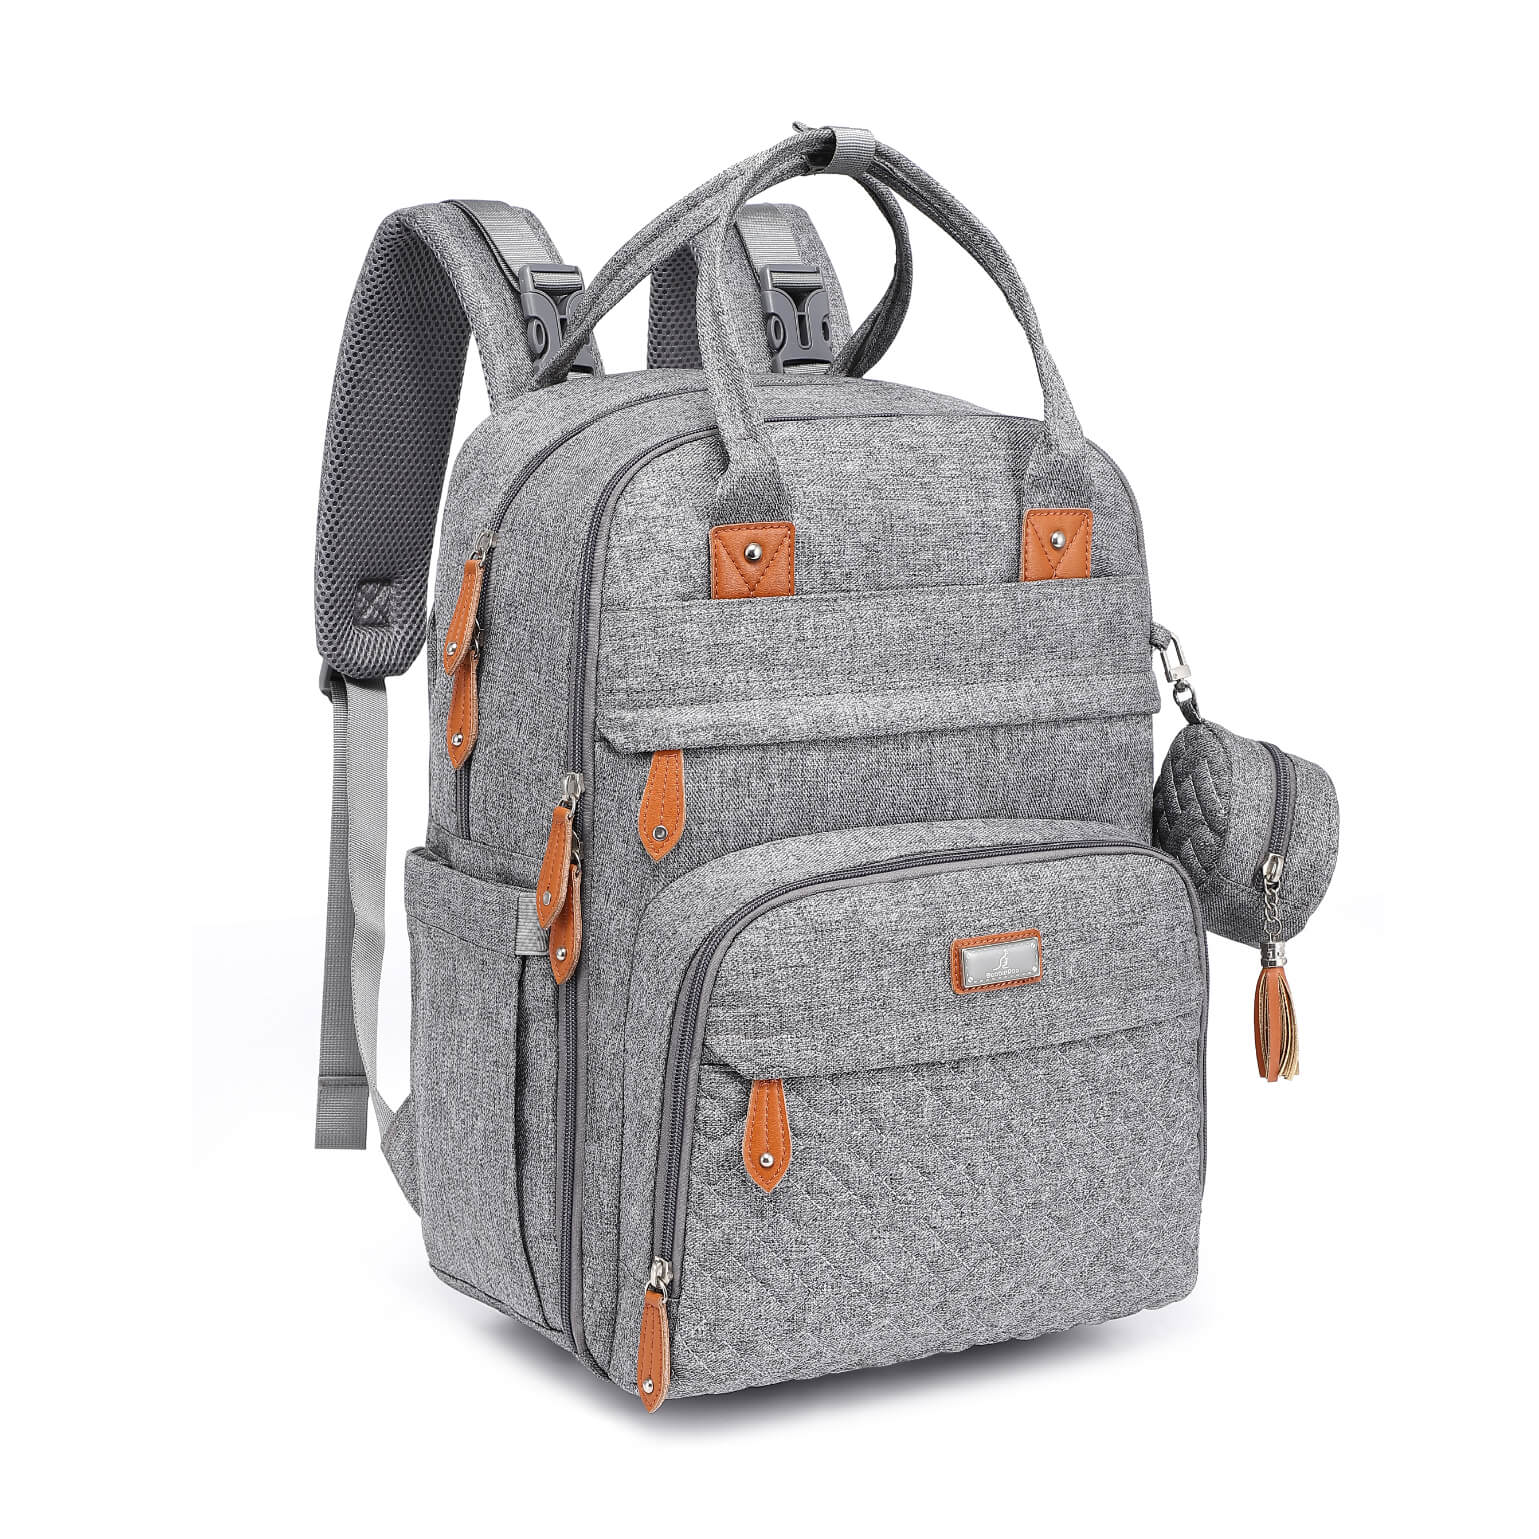 Original Diaper Backpack - Light Gray